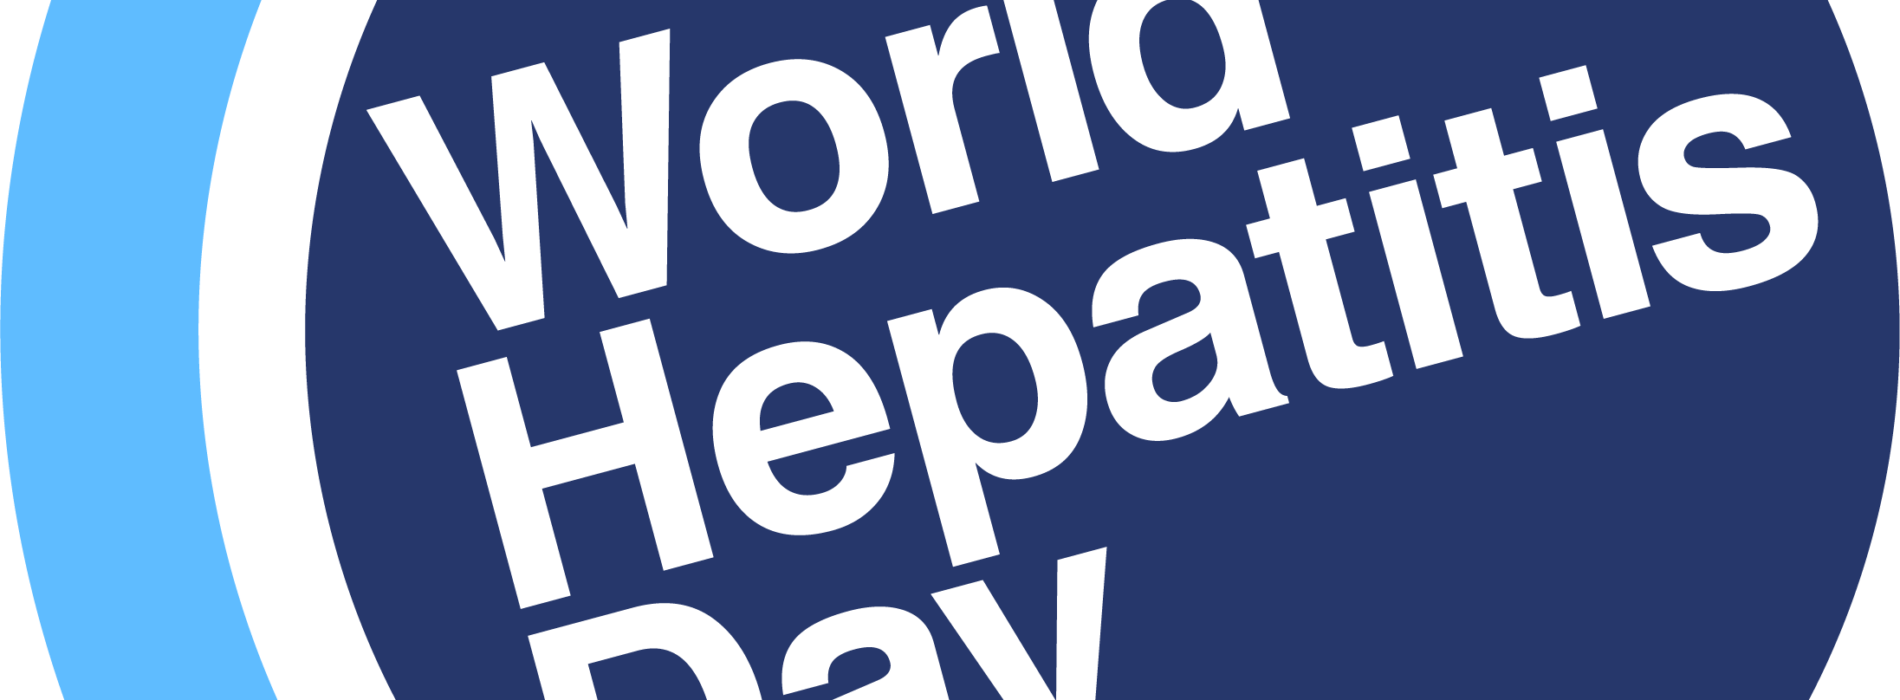 World Hepatitis Day 2023: 91m Africans live with hepatitis